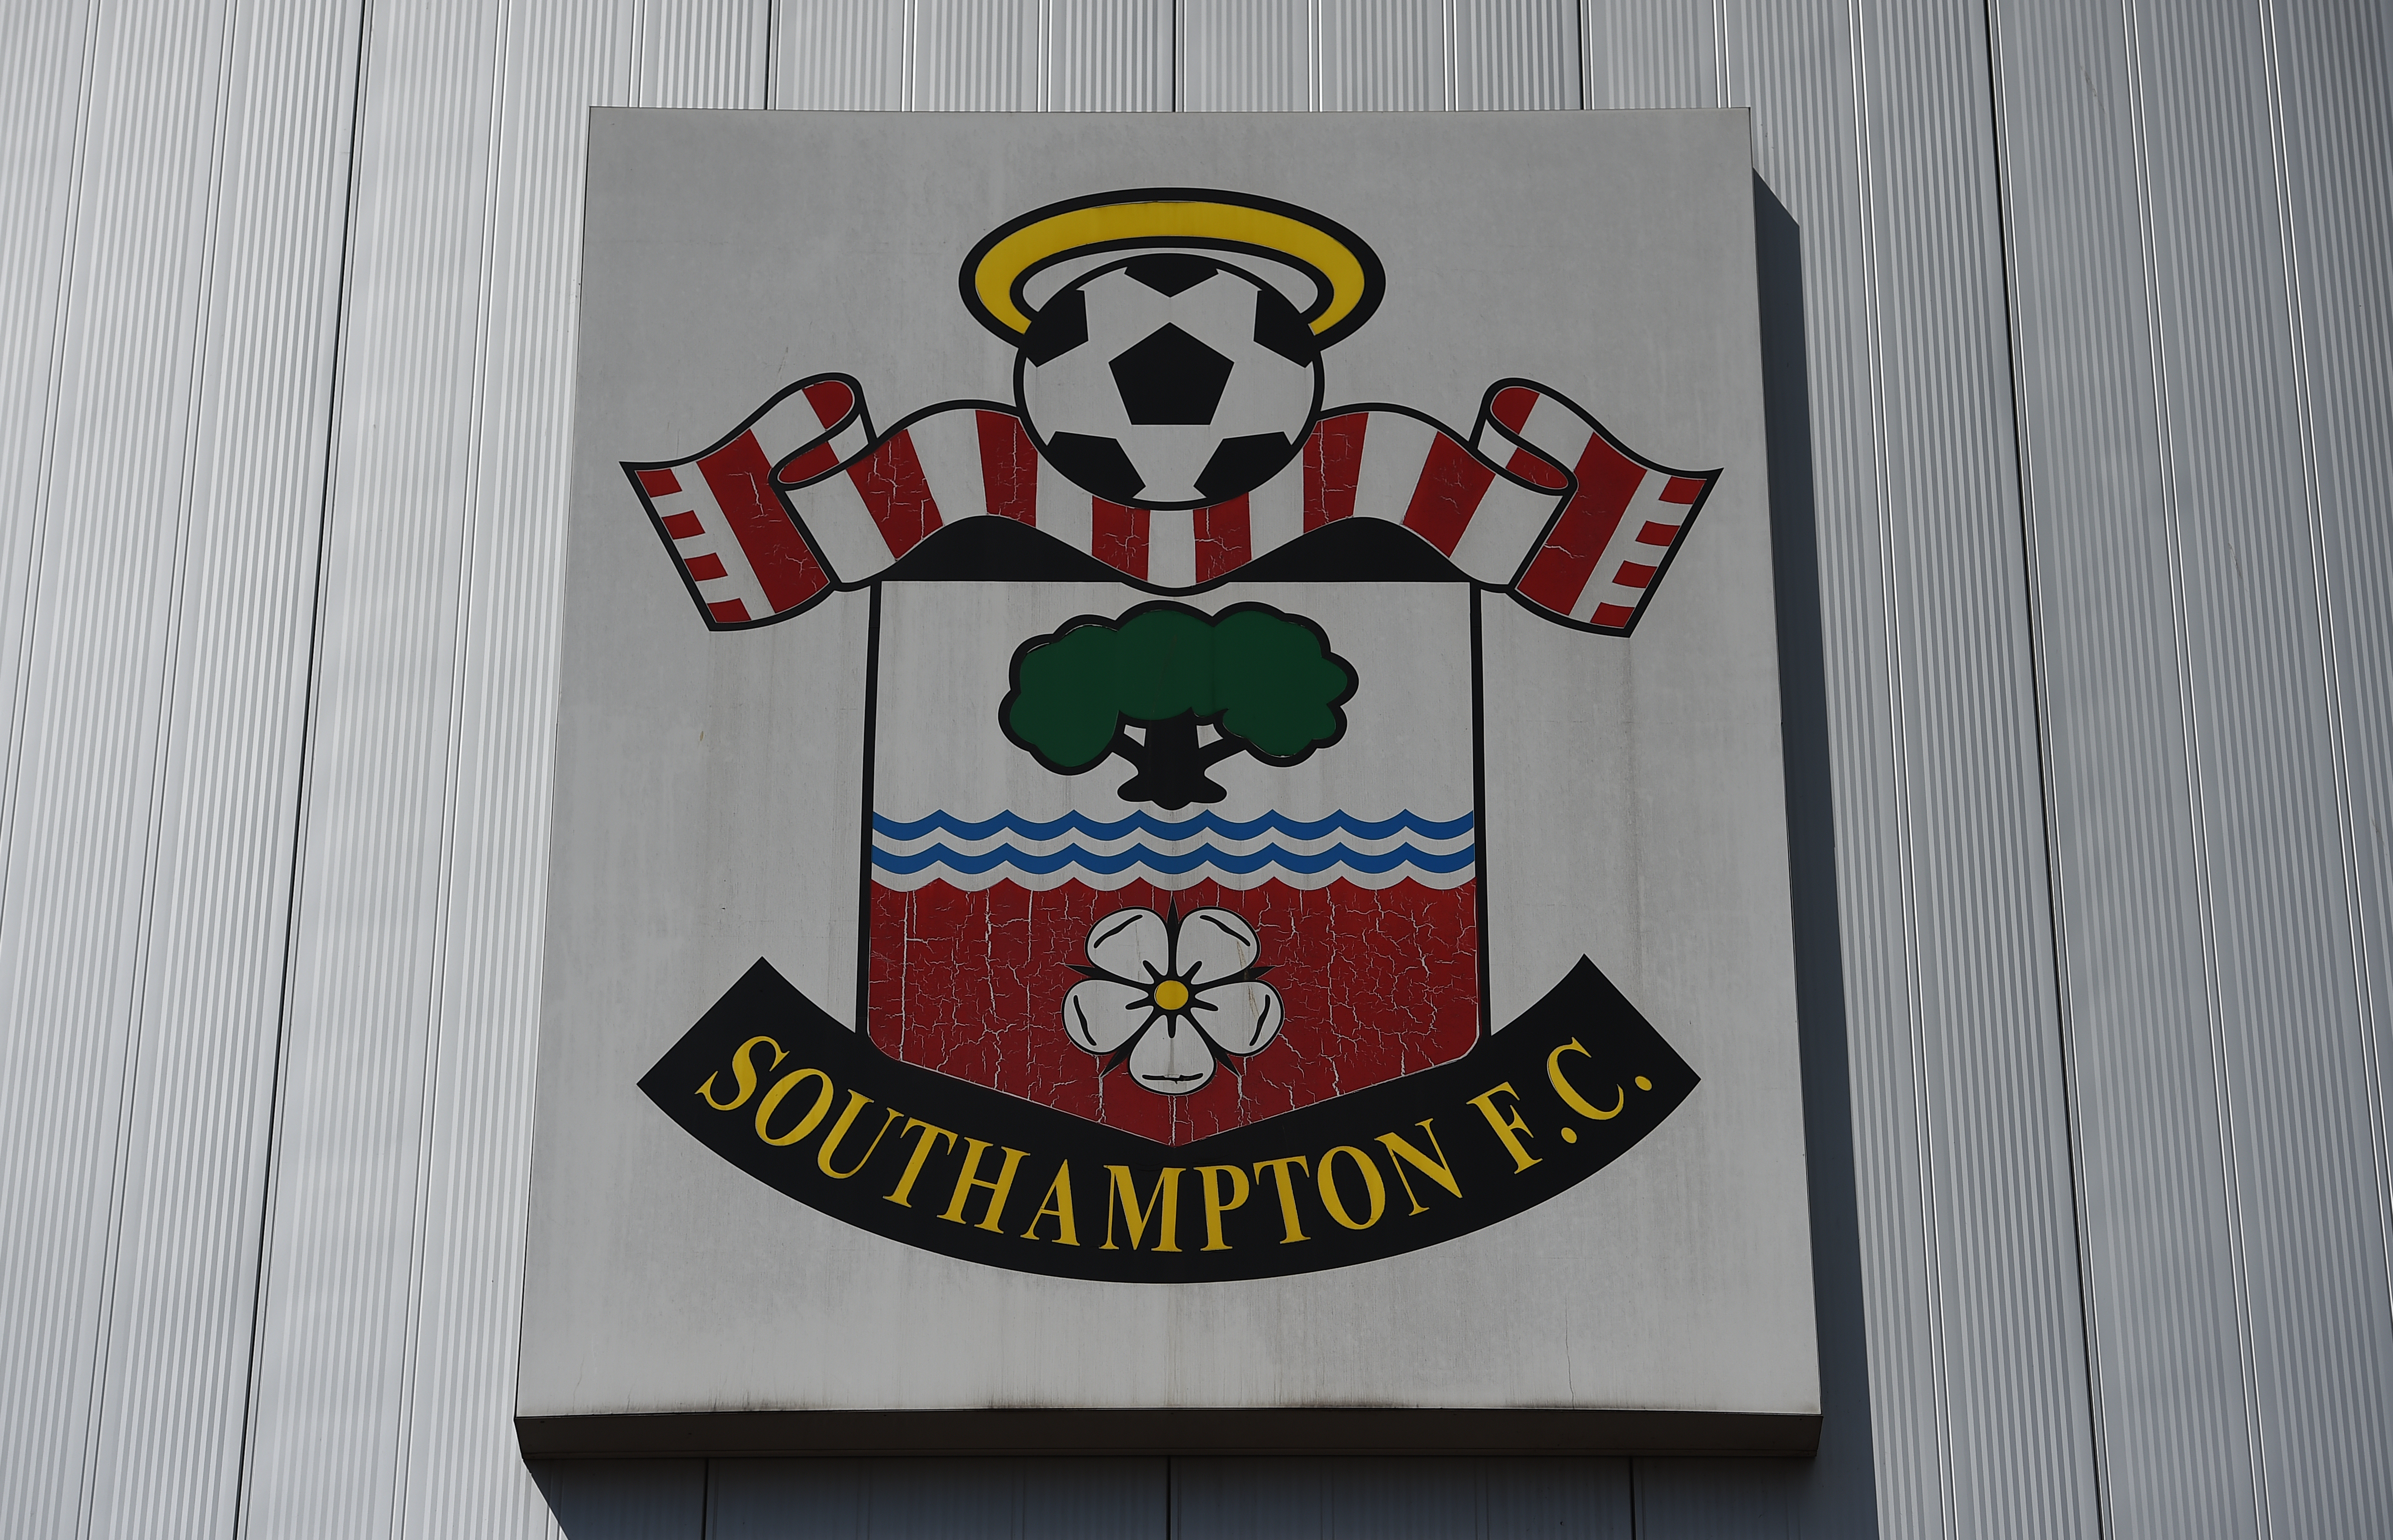 Southampton's badge